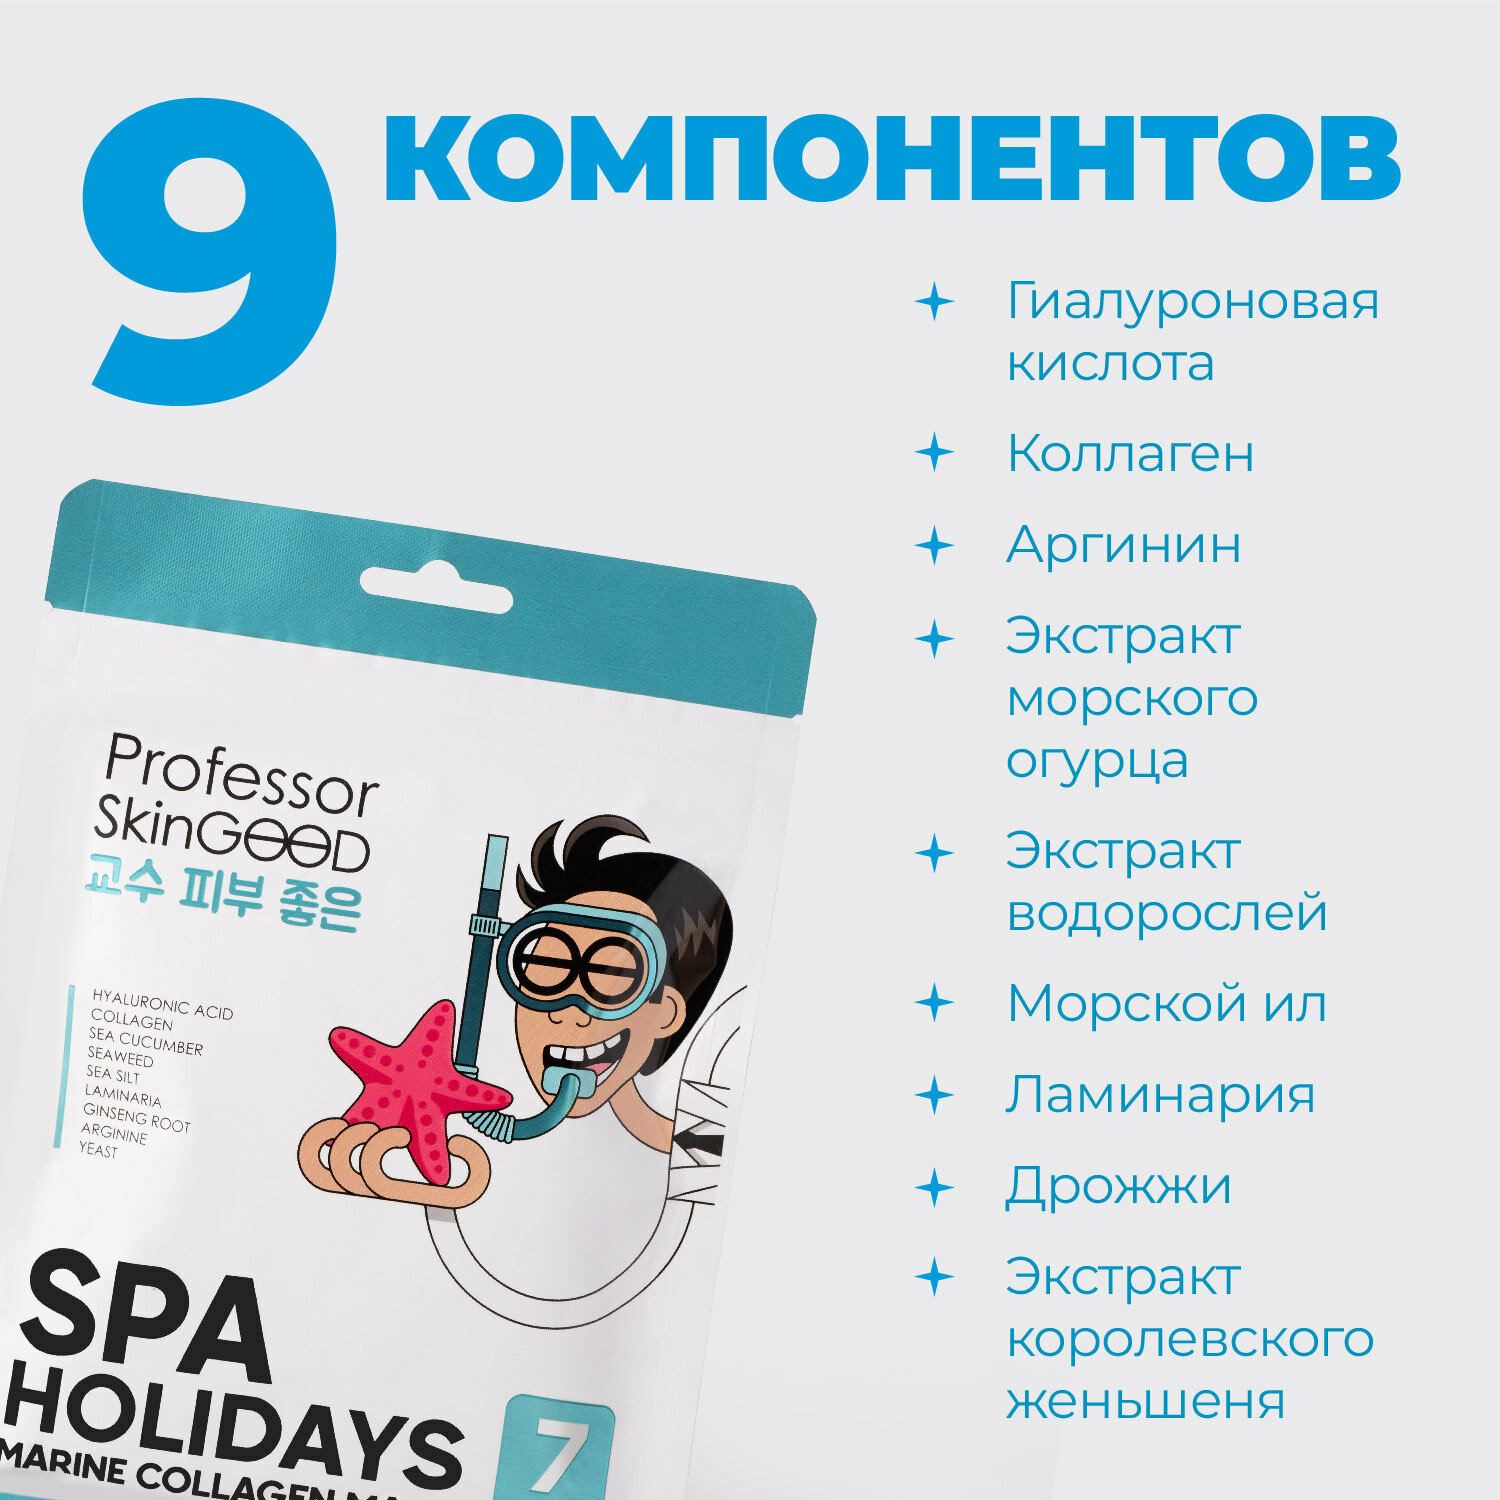 Professor SkinGOOD Увлажняющие маски "Морское СПА" / Spa Holidays Marine Collagen Mask Pack